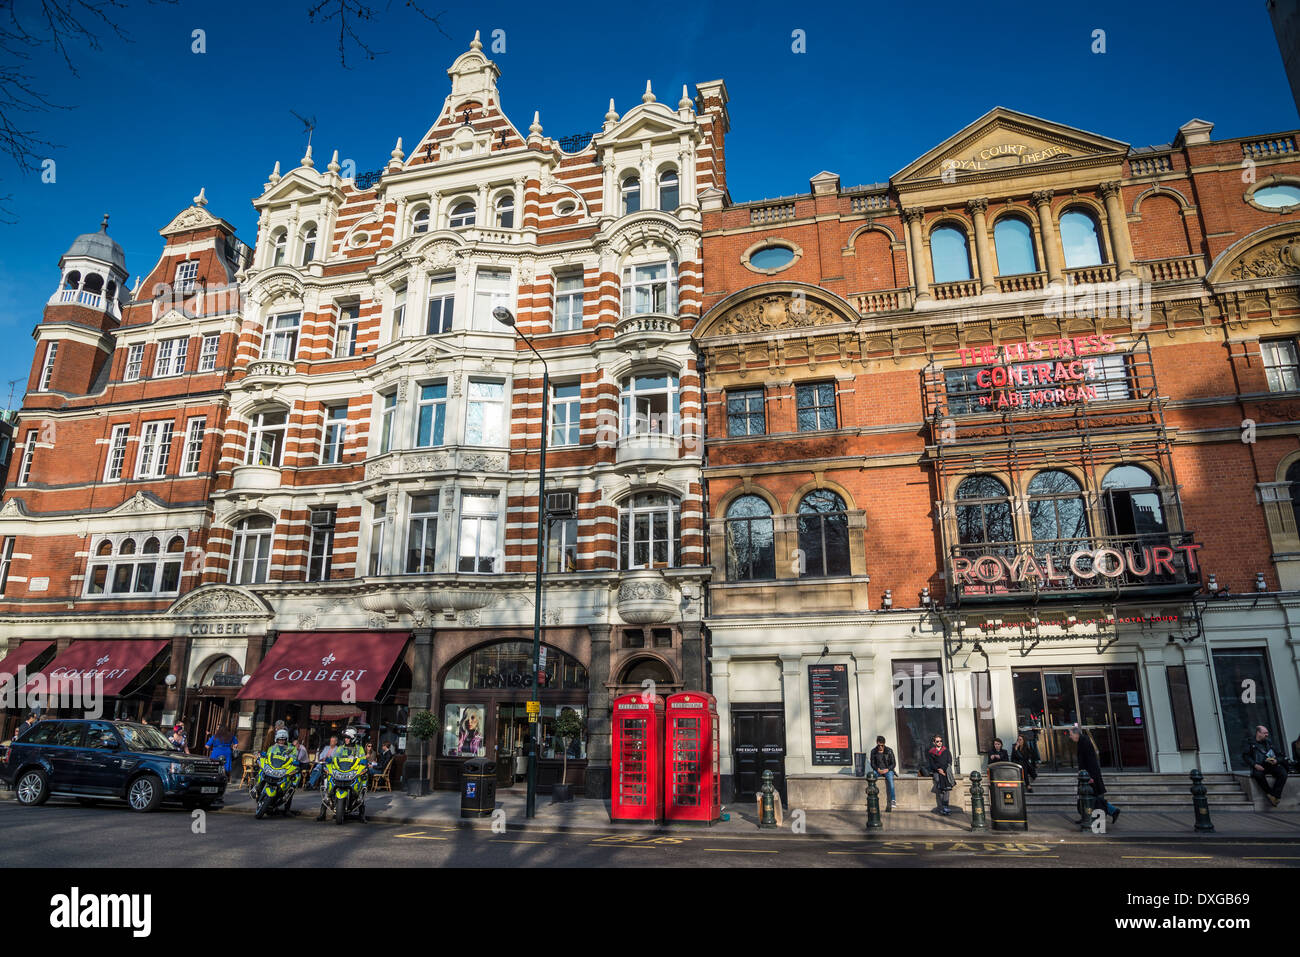 Royal Court theatre, Sloane Square, Chelsea, London, UK Stock Photo